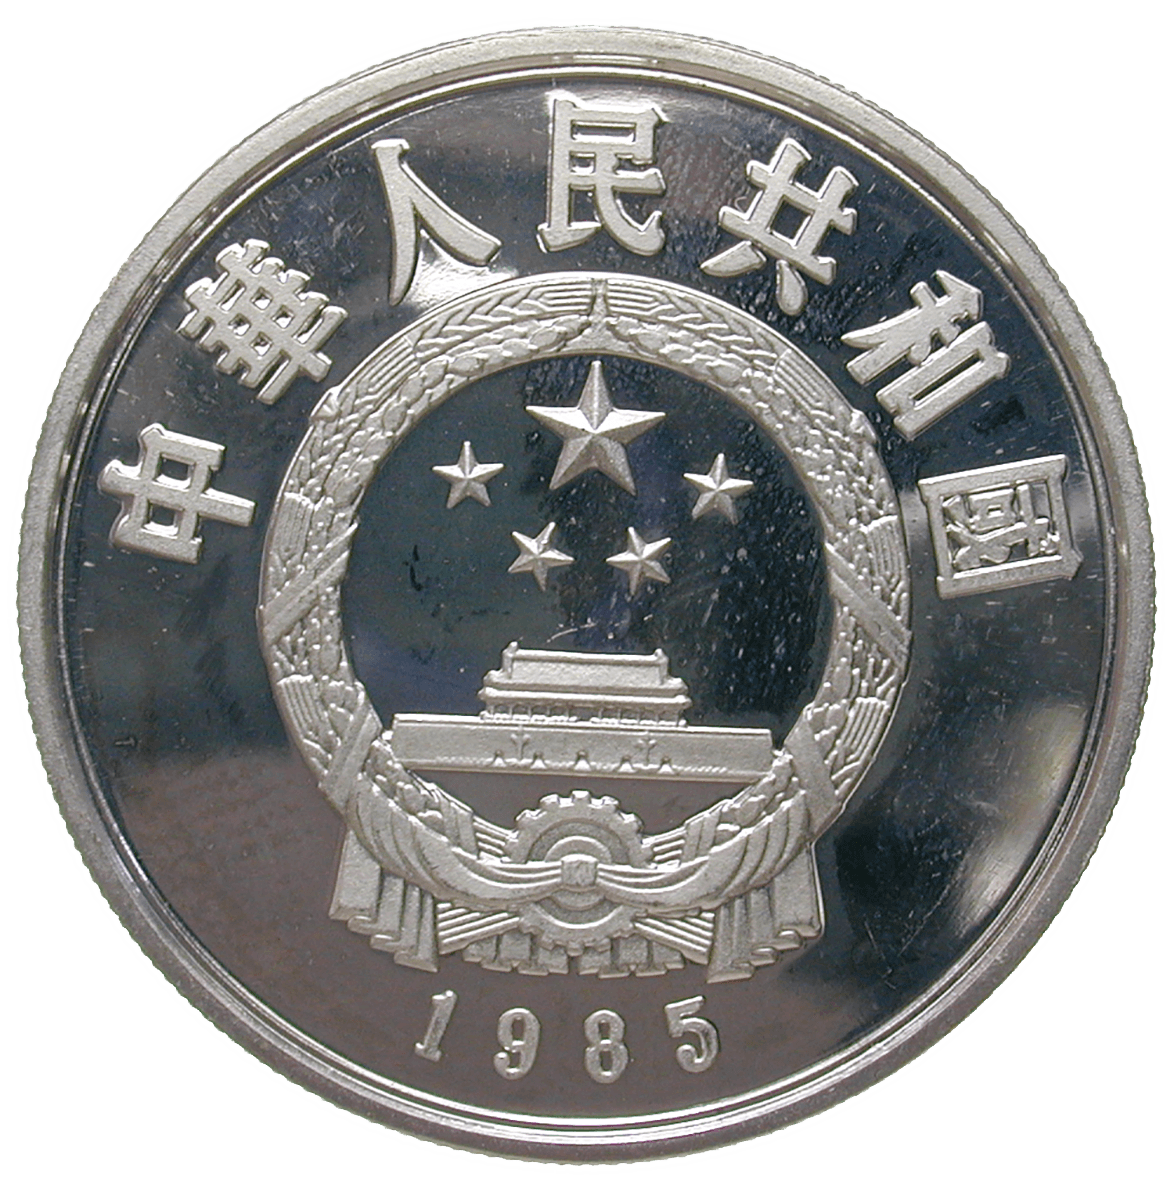 People's Republic of China, 5 Yuan 1985 (obverse)